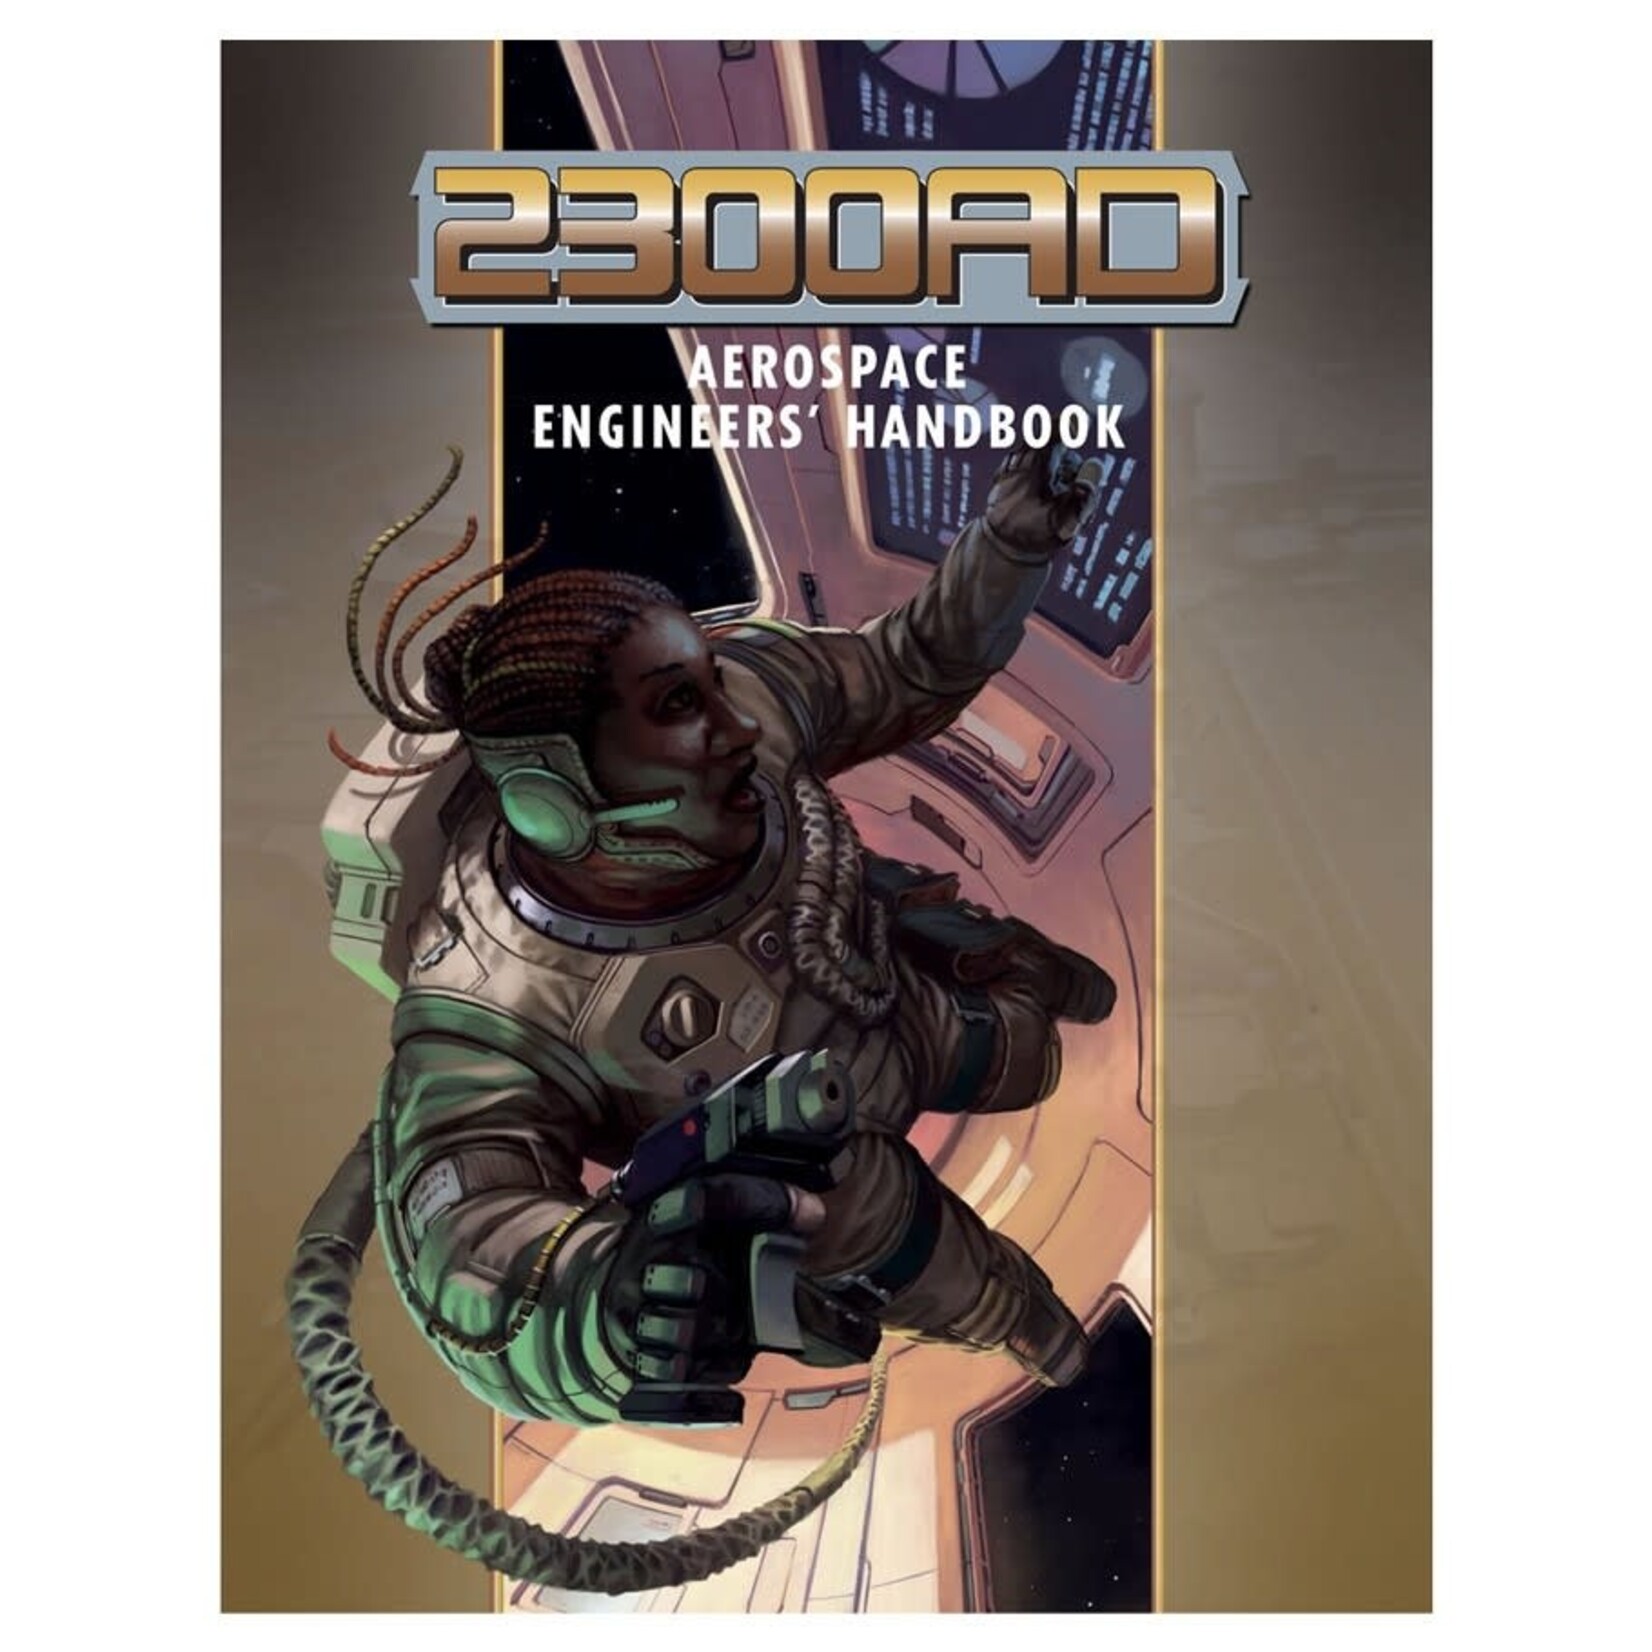 Mongoose Publishing 2300 AD Aerospace Engineers' handbook